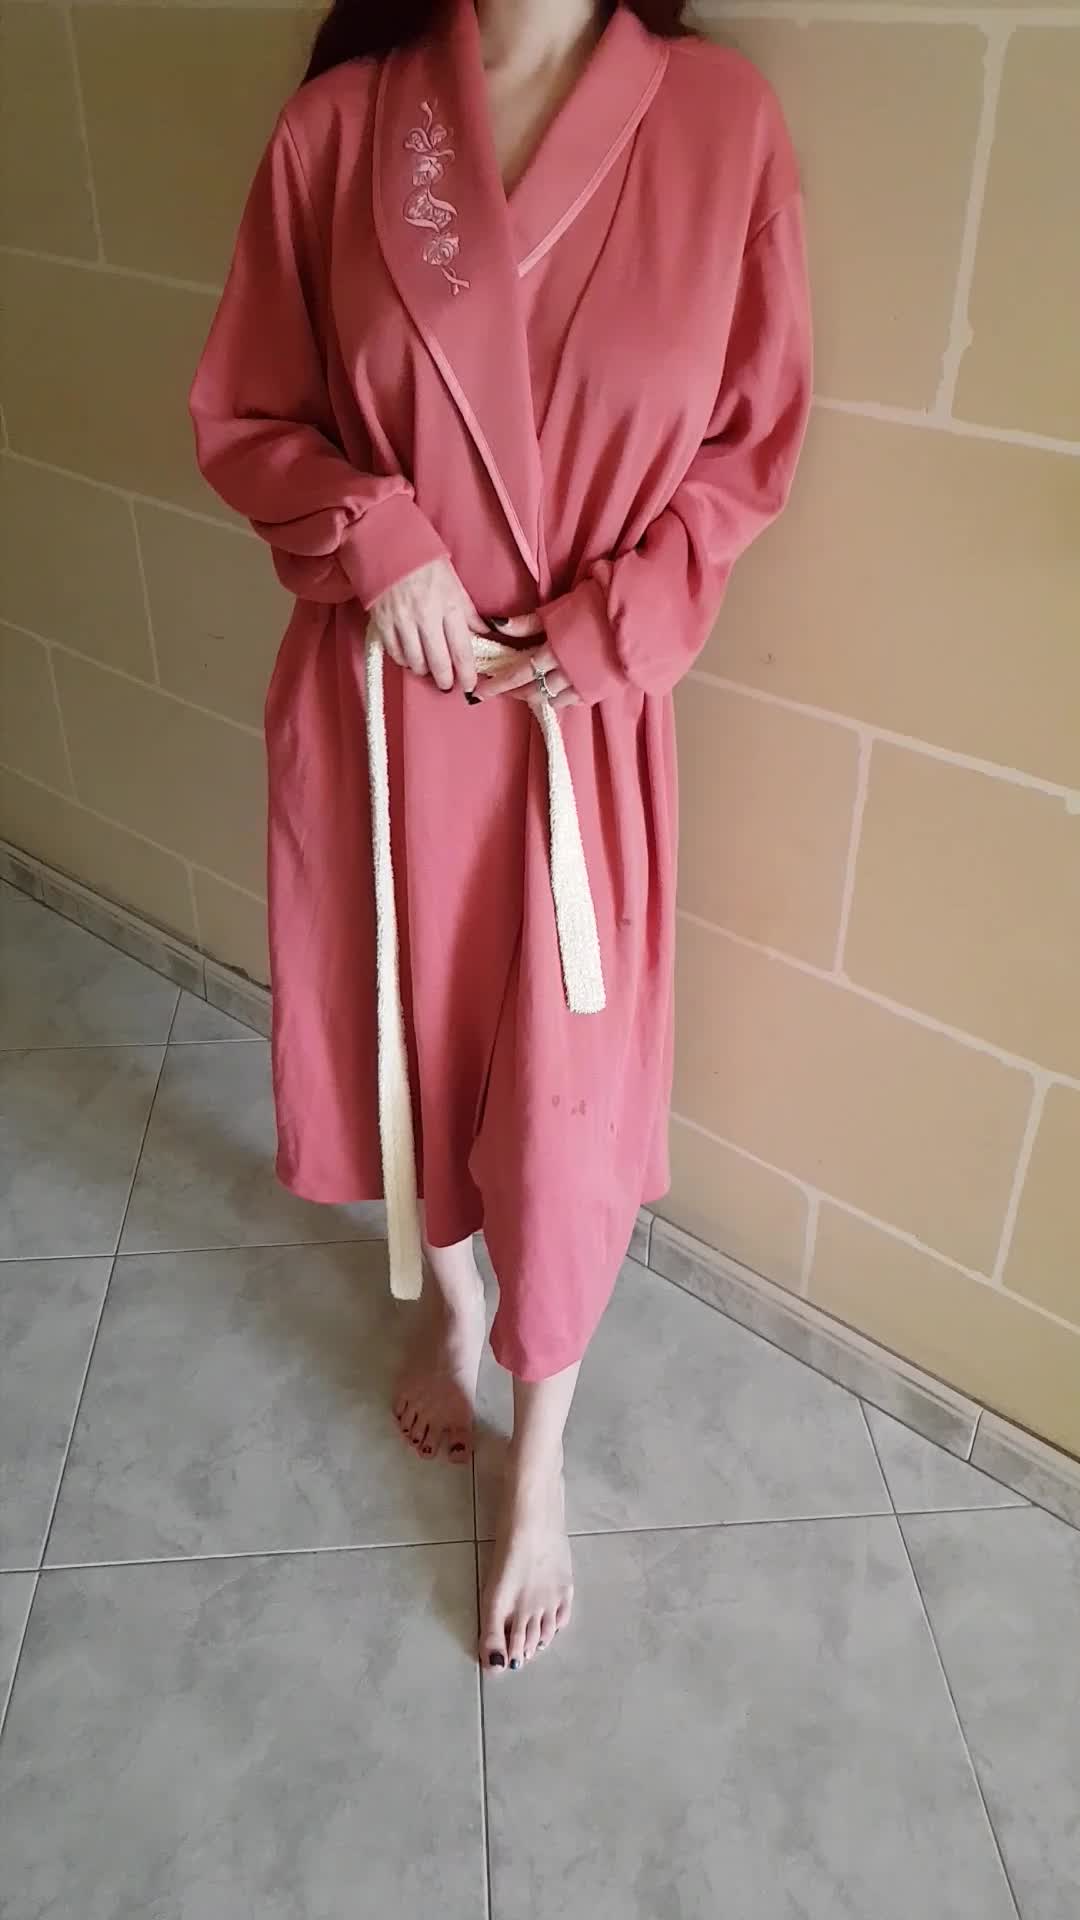 I like robes